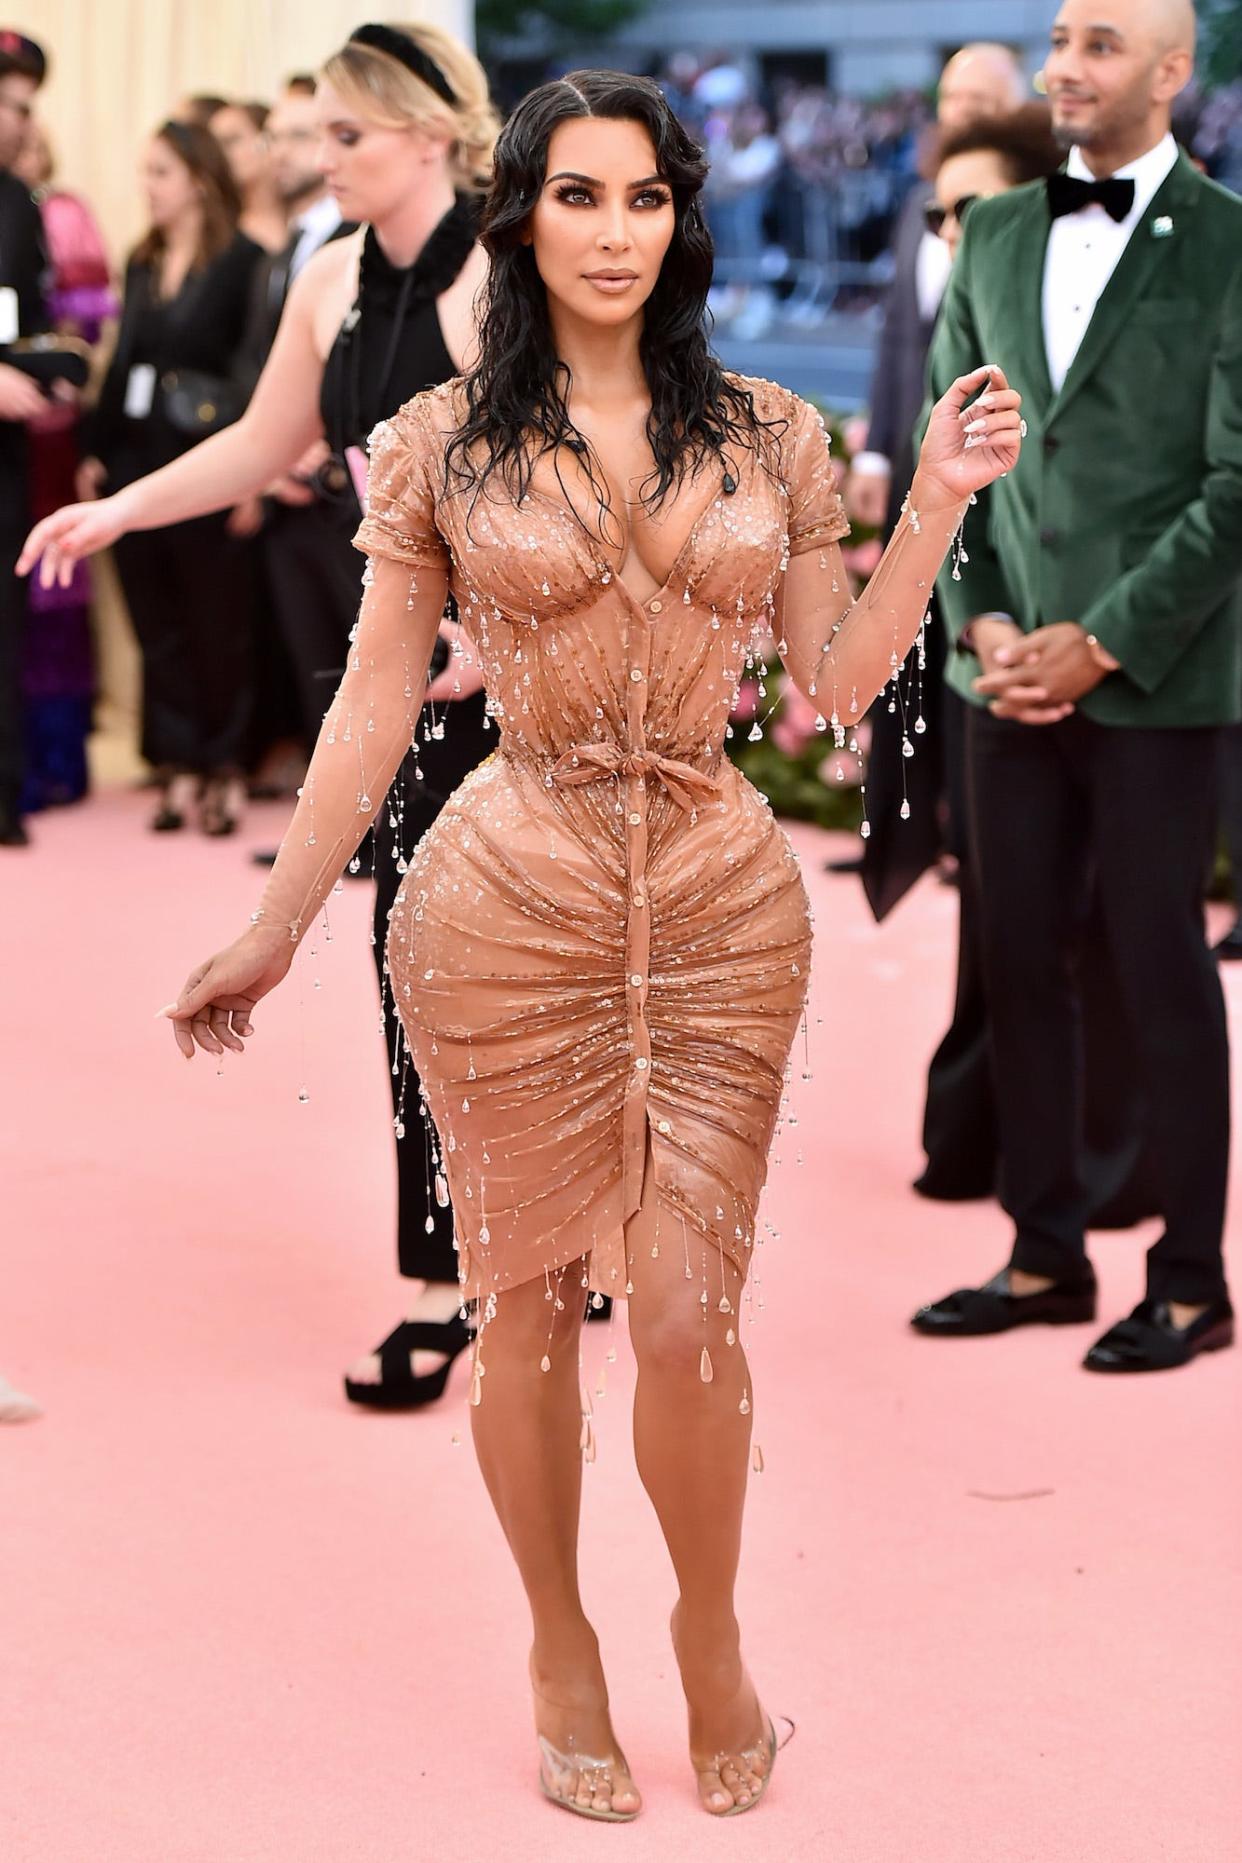 Kim Kardashian on the Met Gala red carpet wearing a formfitting sheer dress with crystal raindrop embellishments.